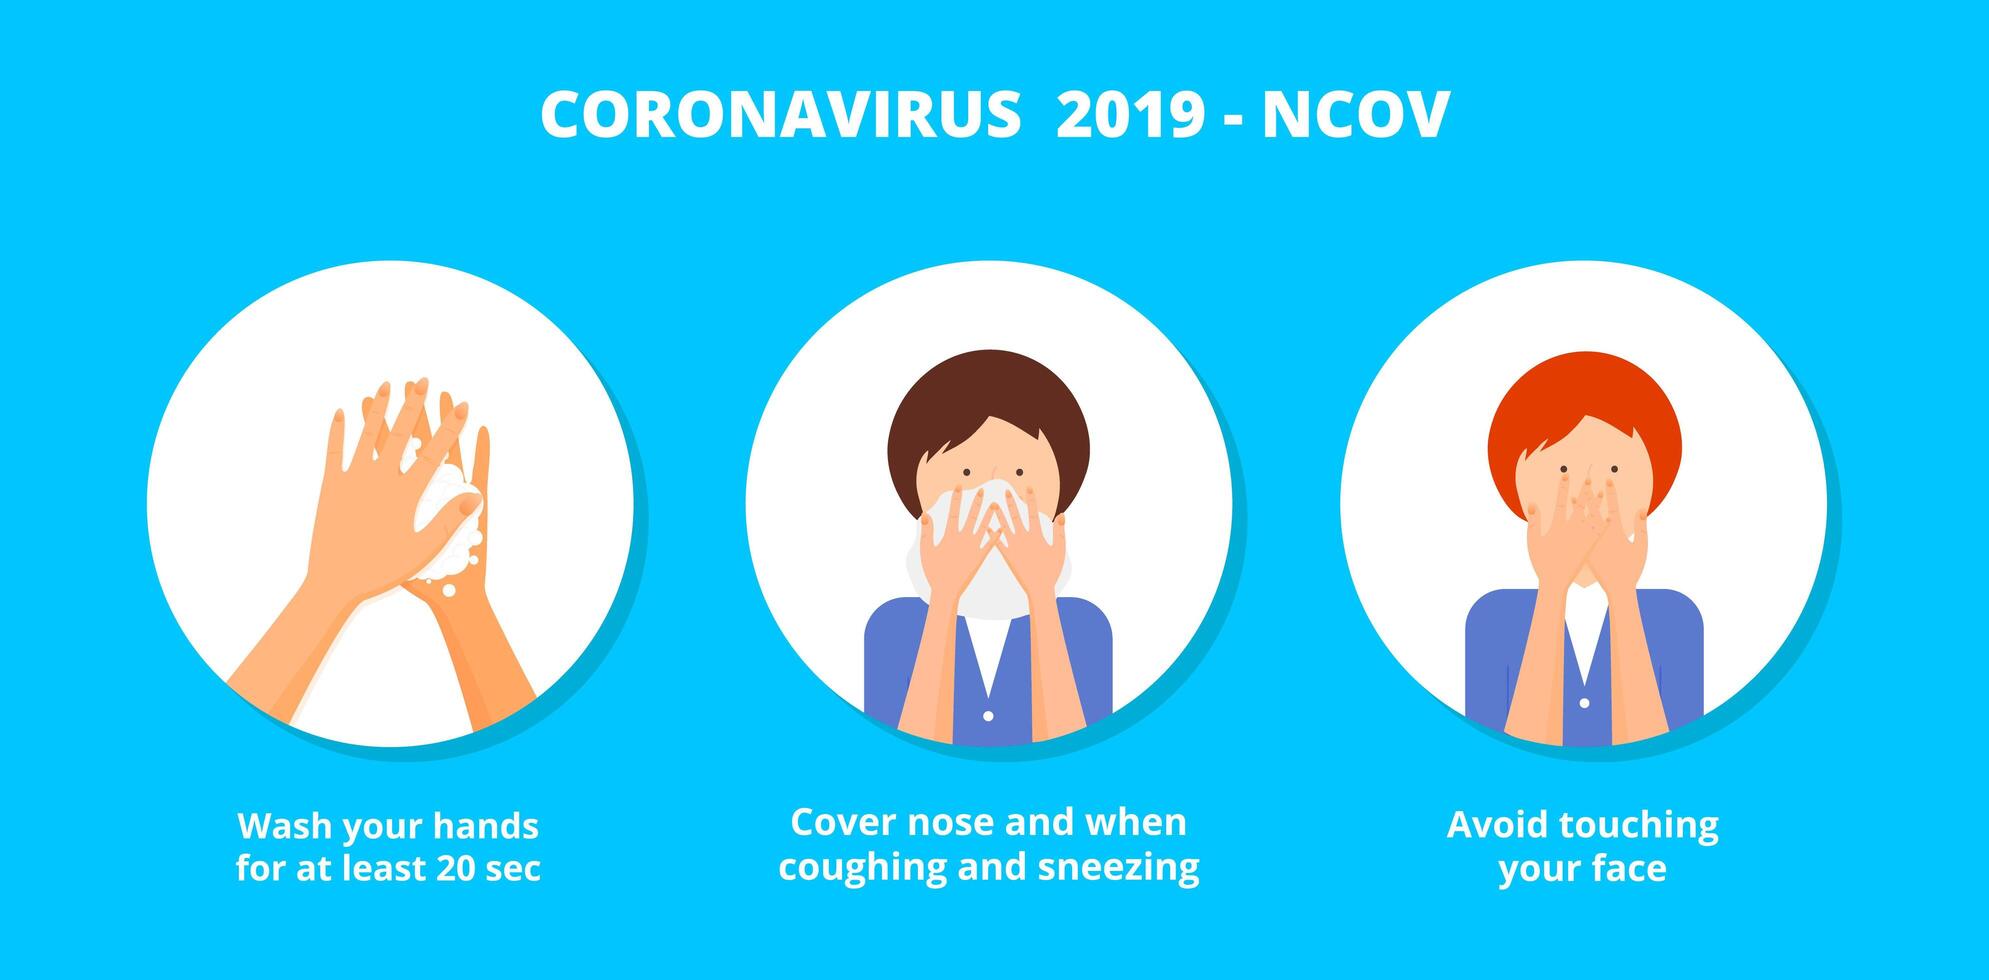 Coronavirus COVID-19 prevention methods infographic. vector